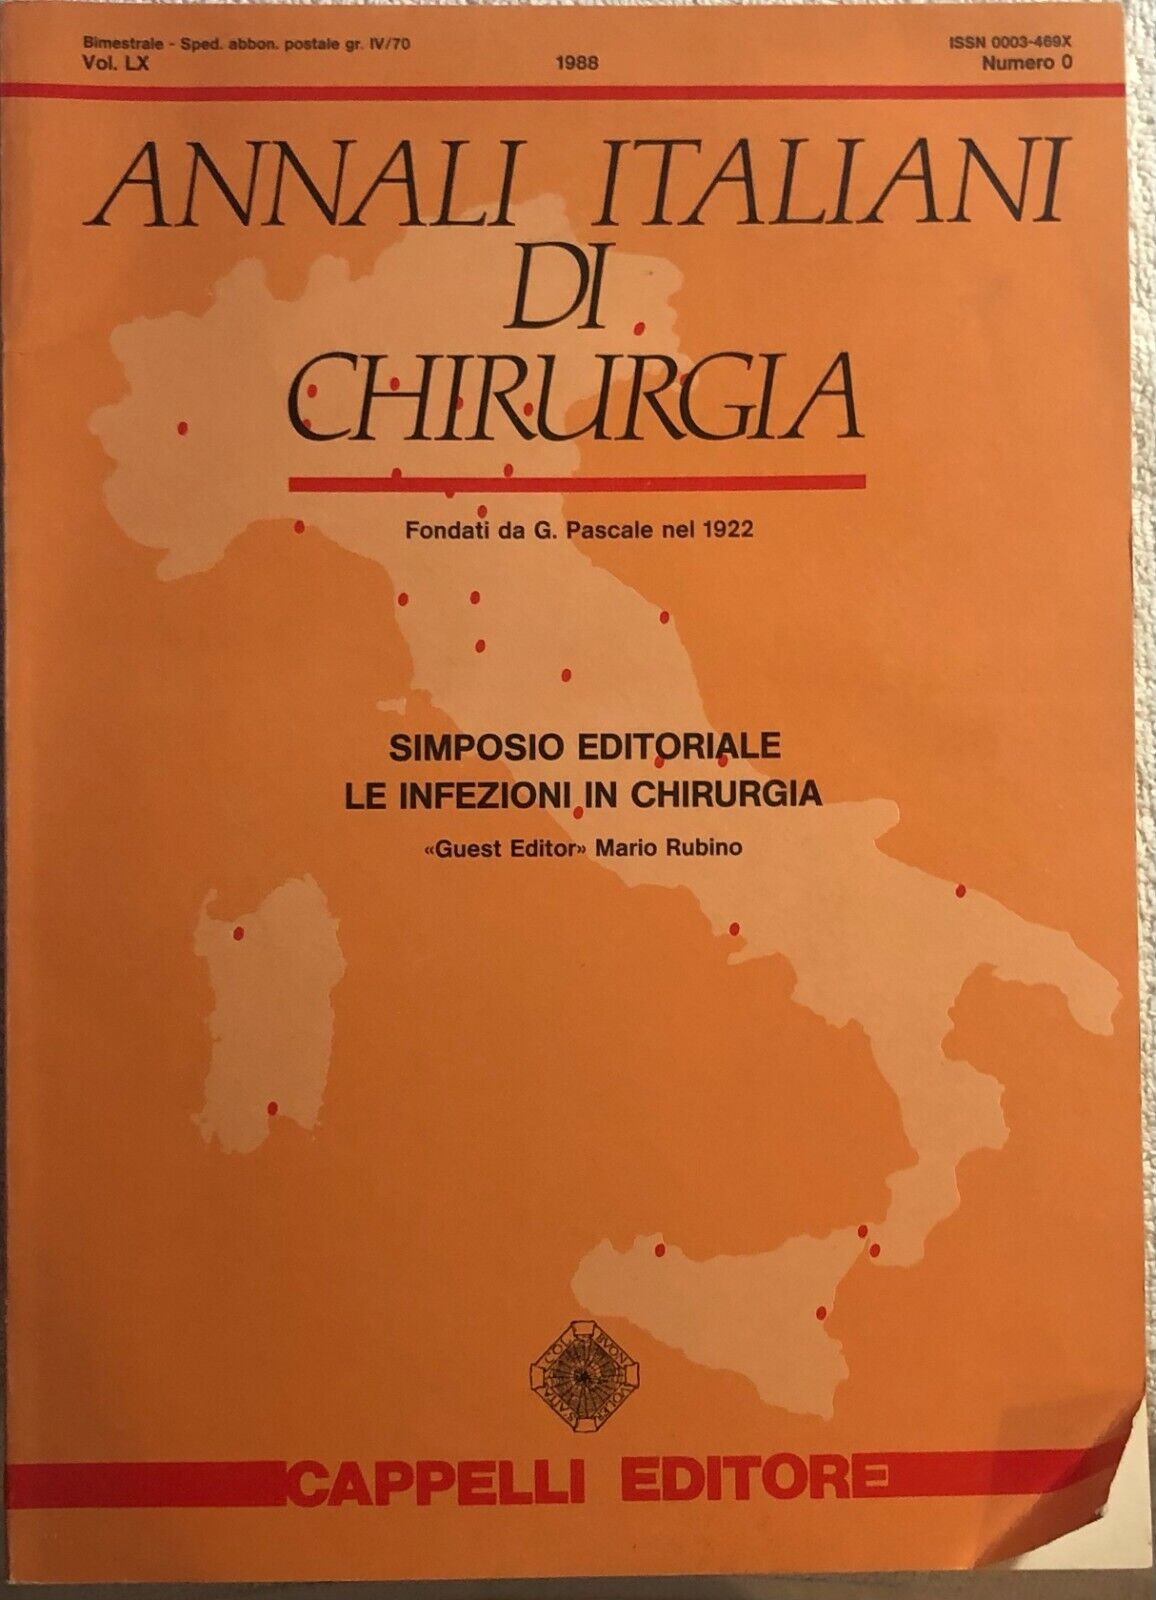 Annali italiani di chirurgia n.0 di G. Pascale,  1988,  Cappelli Editore